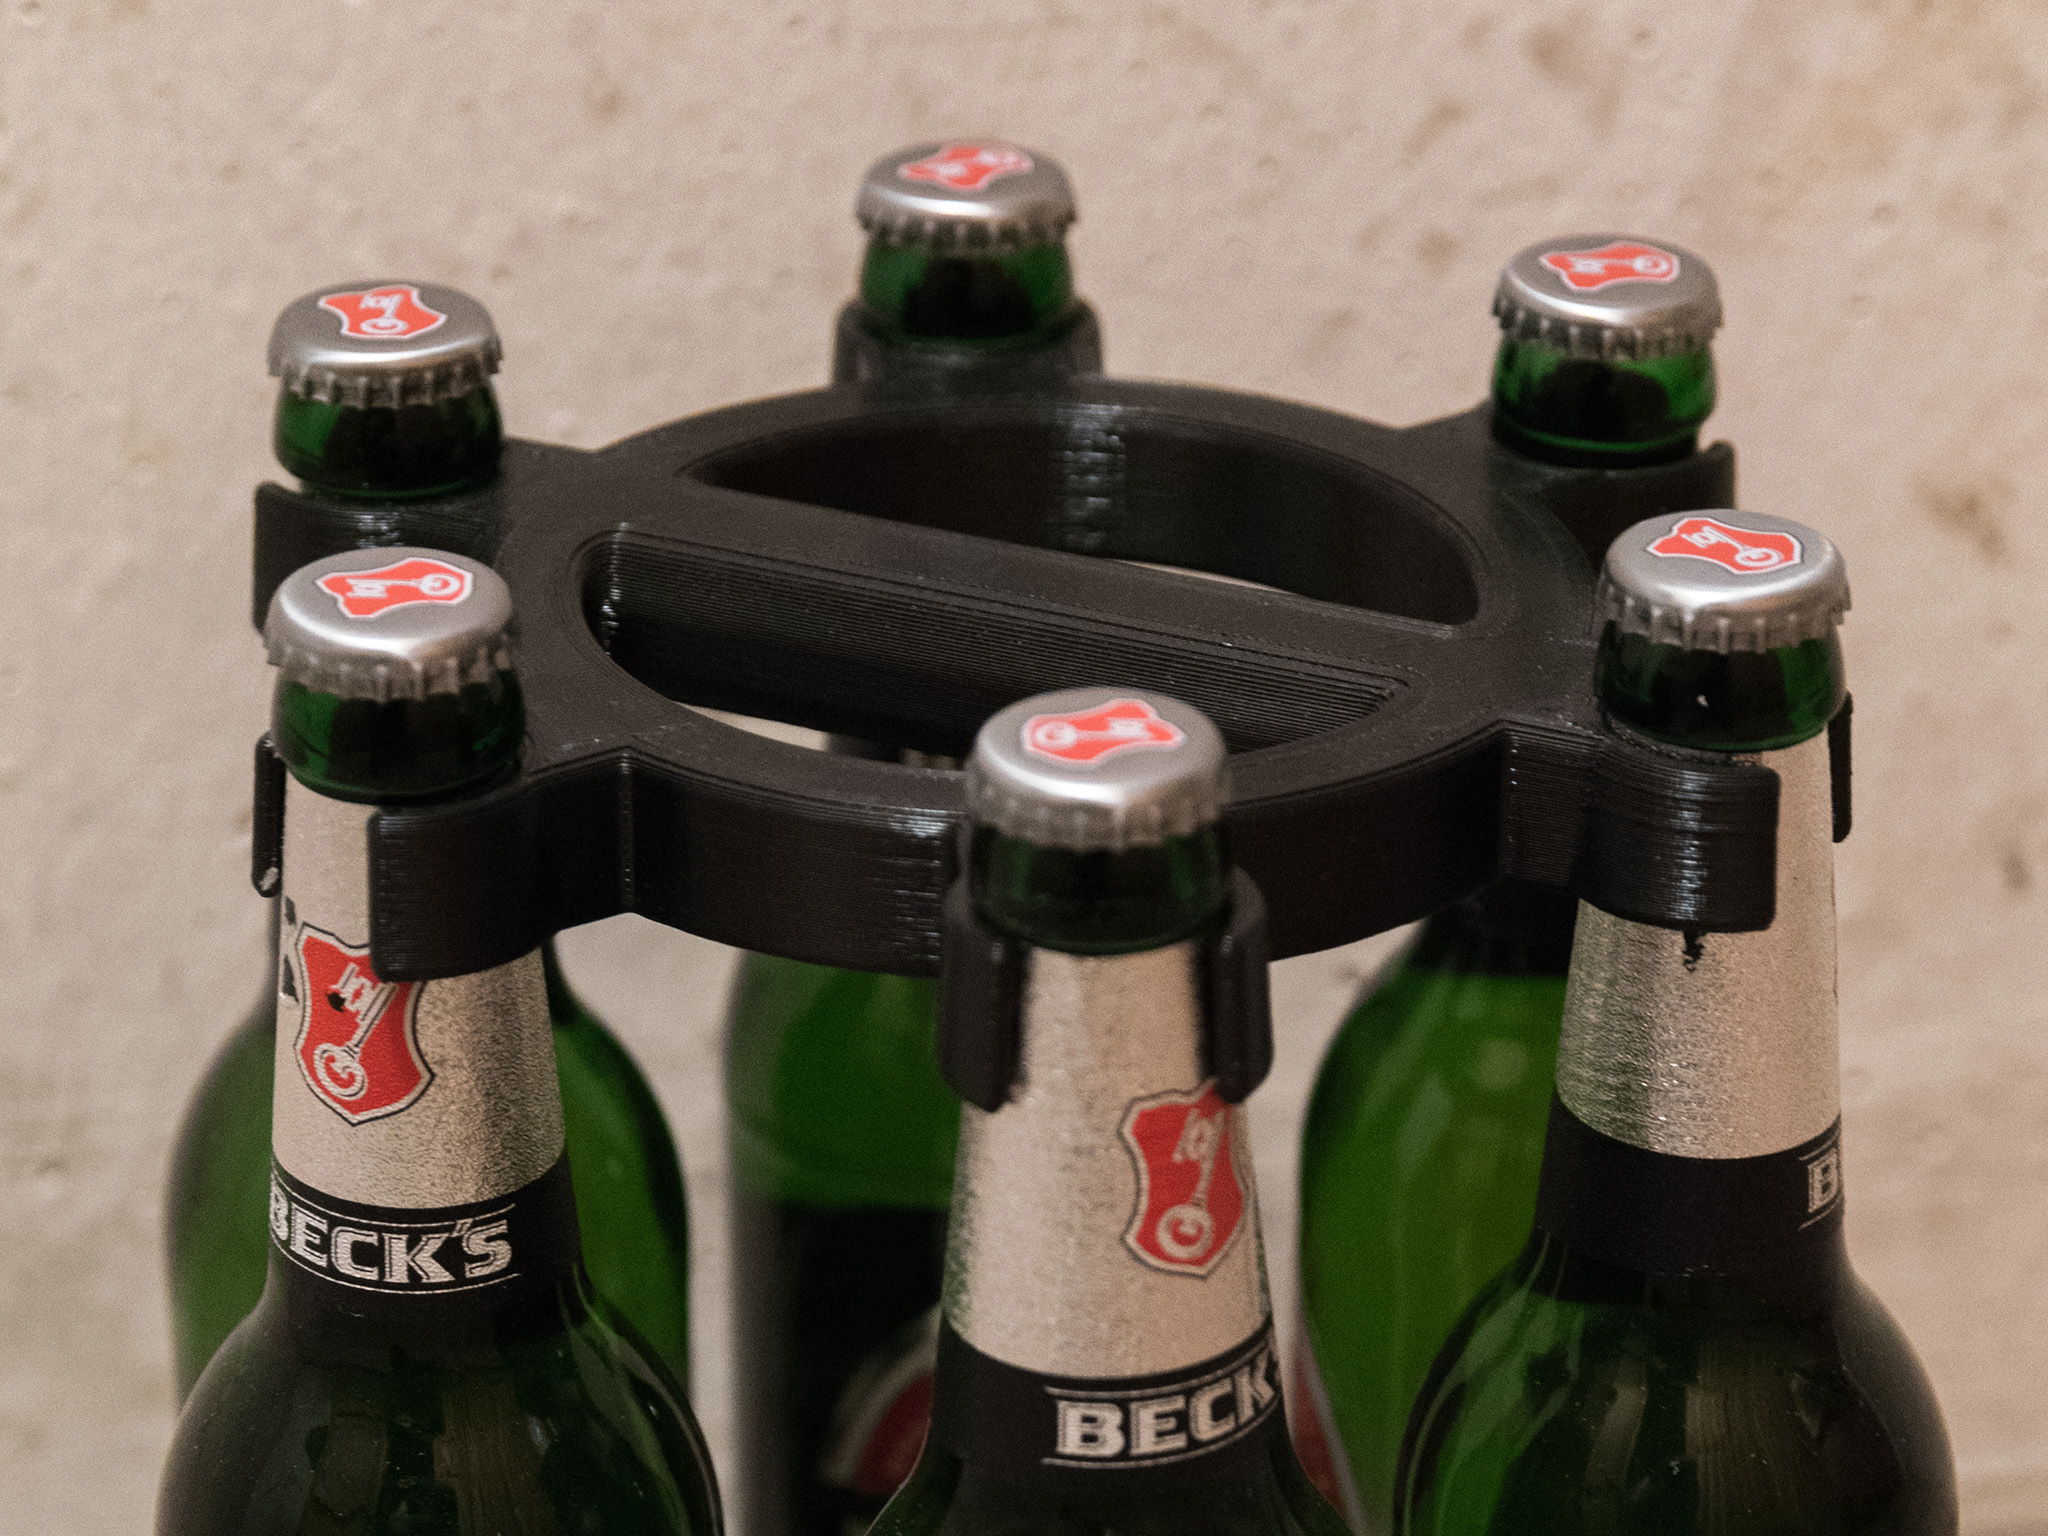 Circular Beer Bottle Carrier